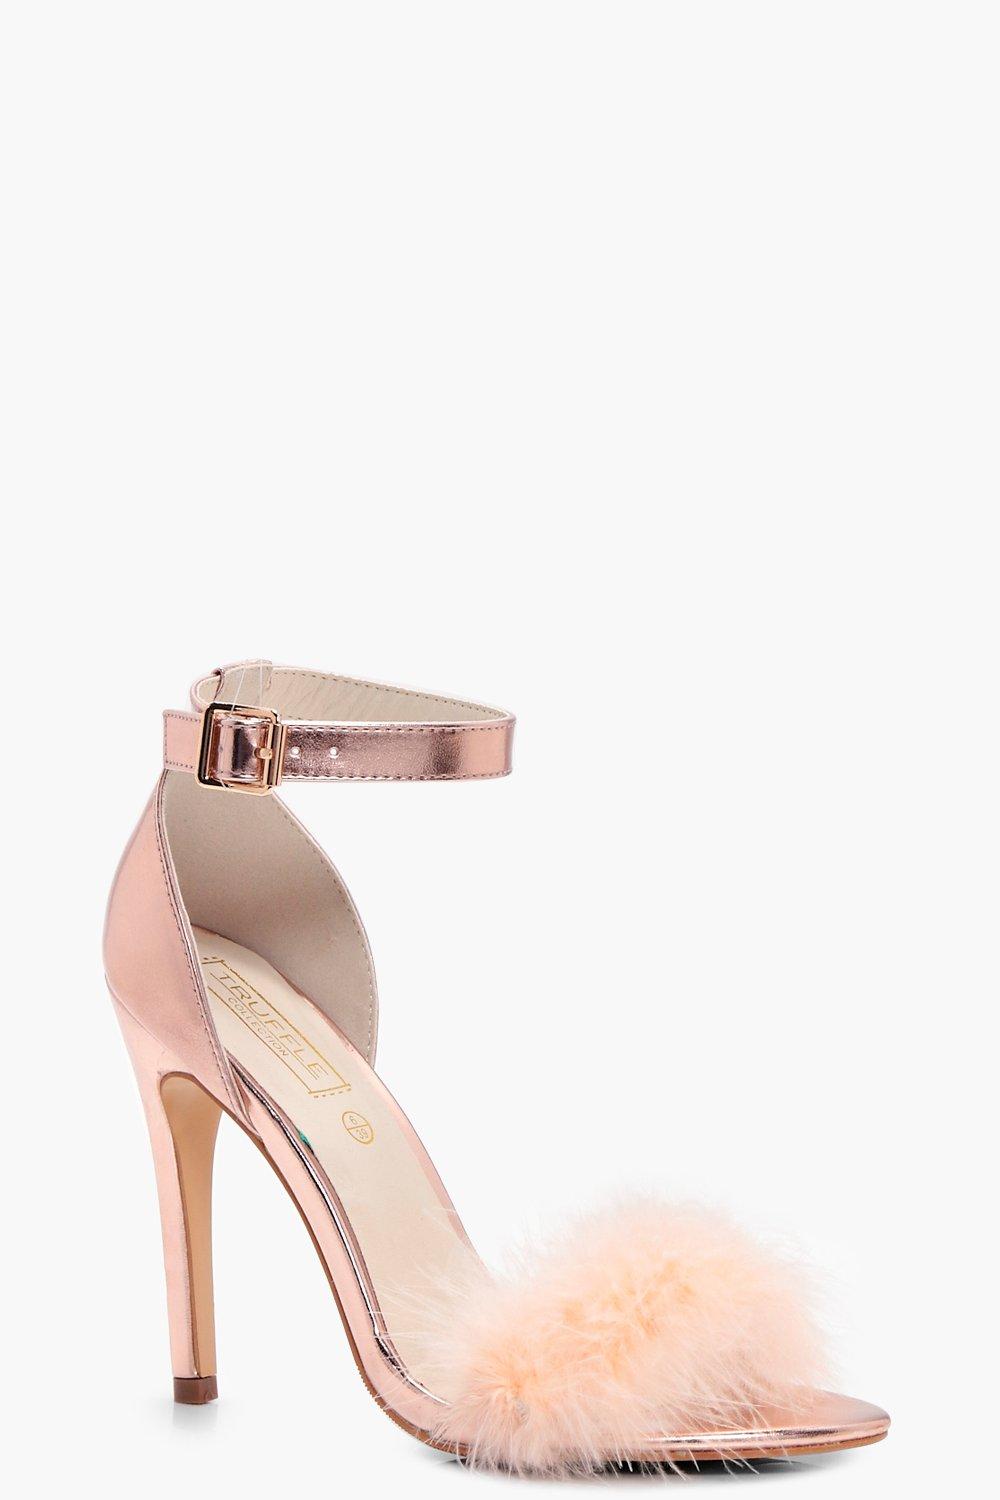 rose gold heels canada